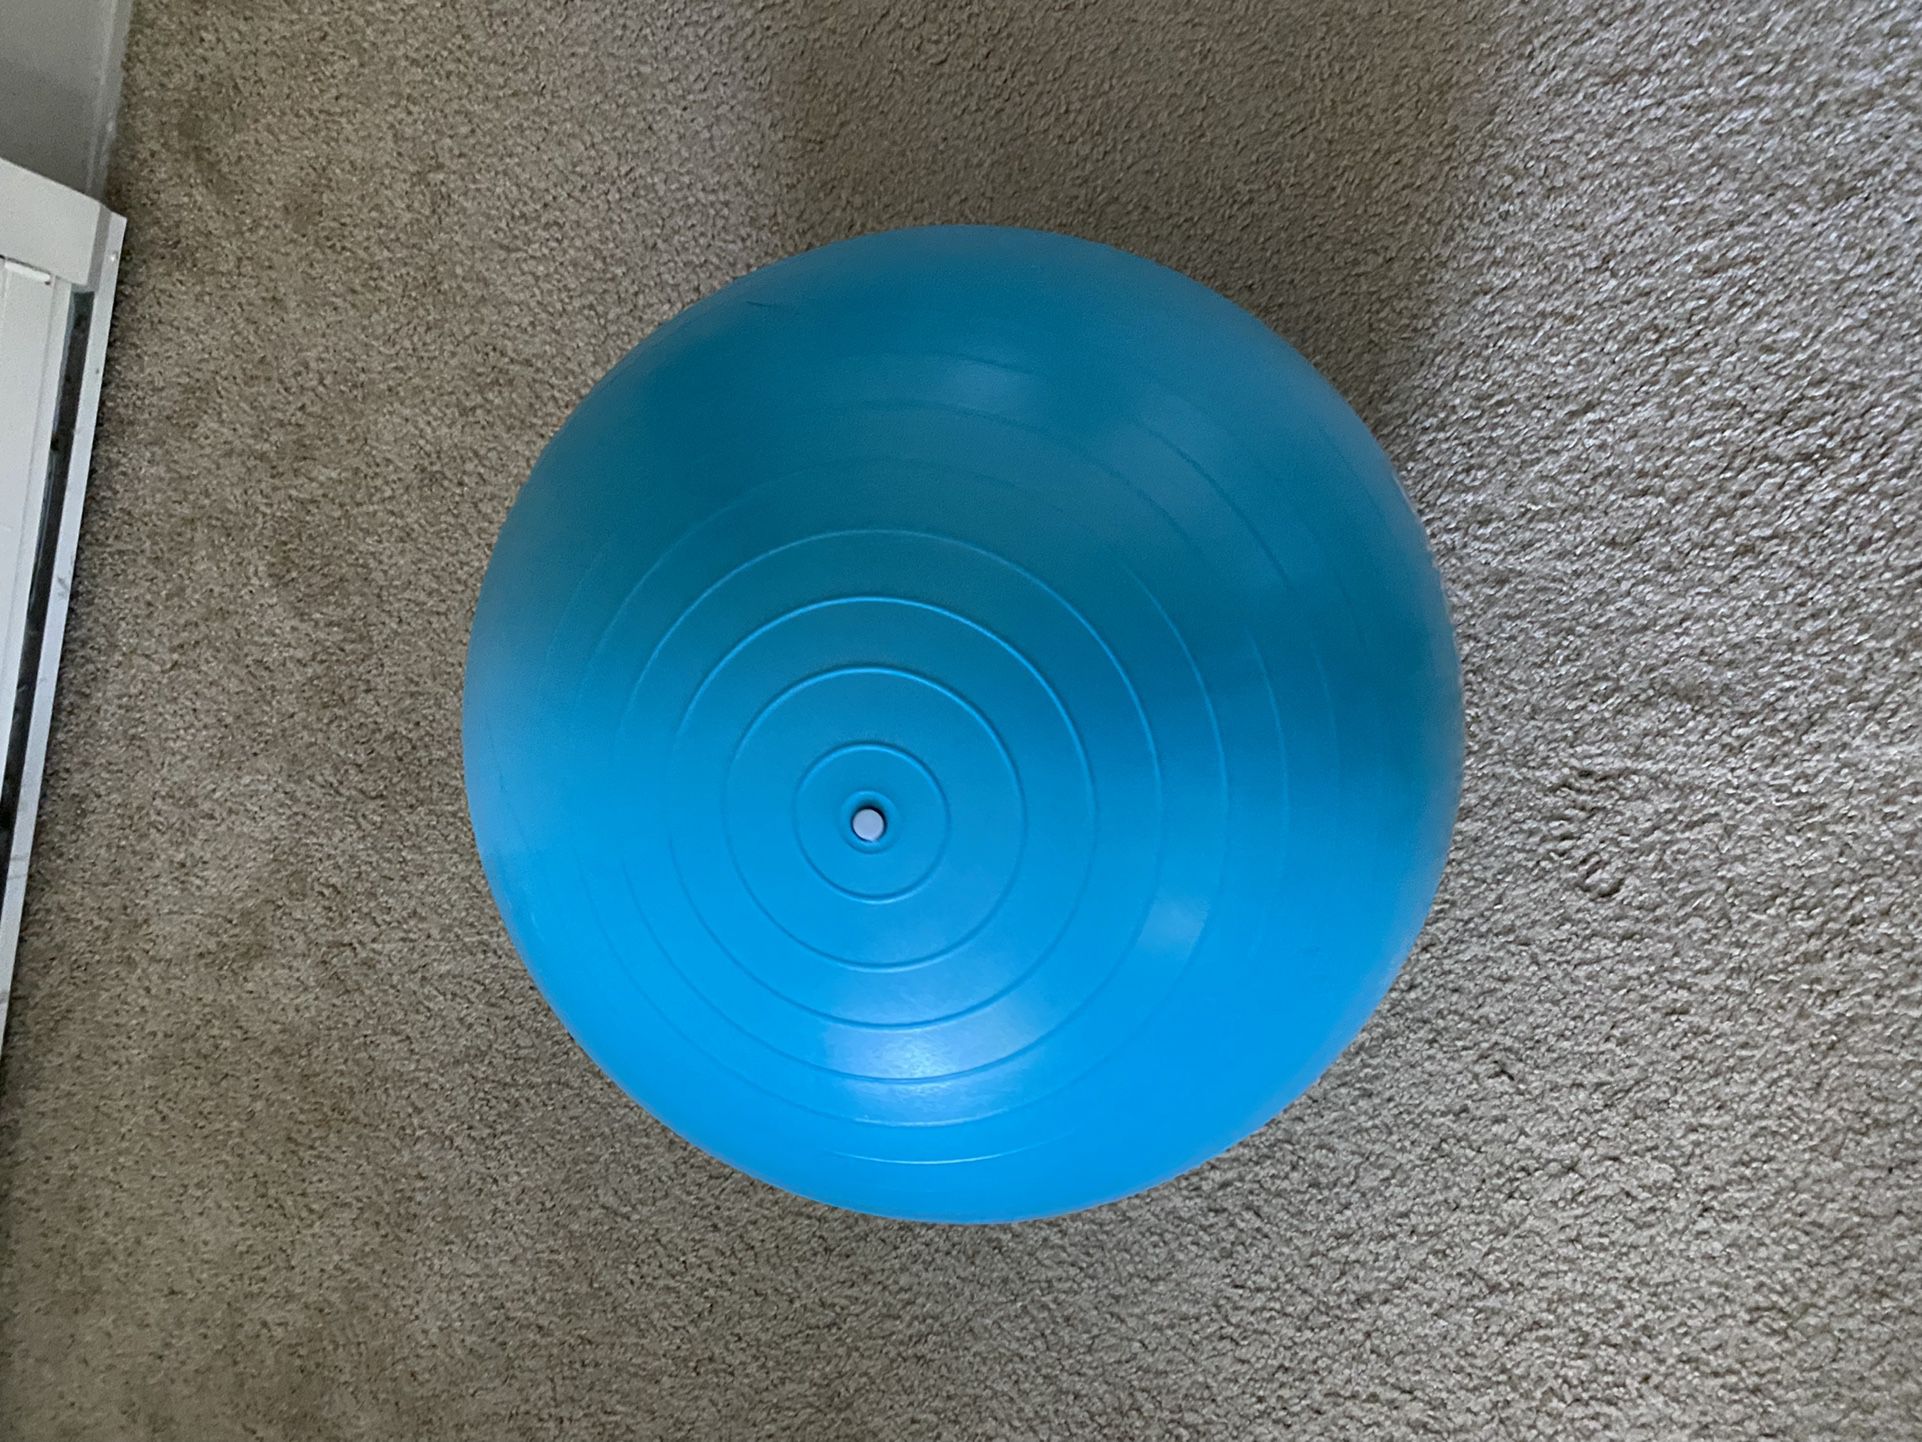 Trideer Exercise /Pregnancy Ball